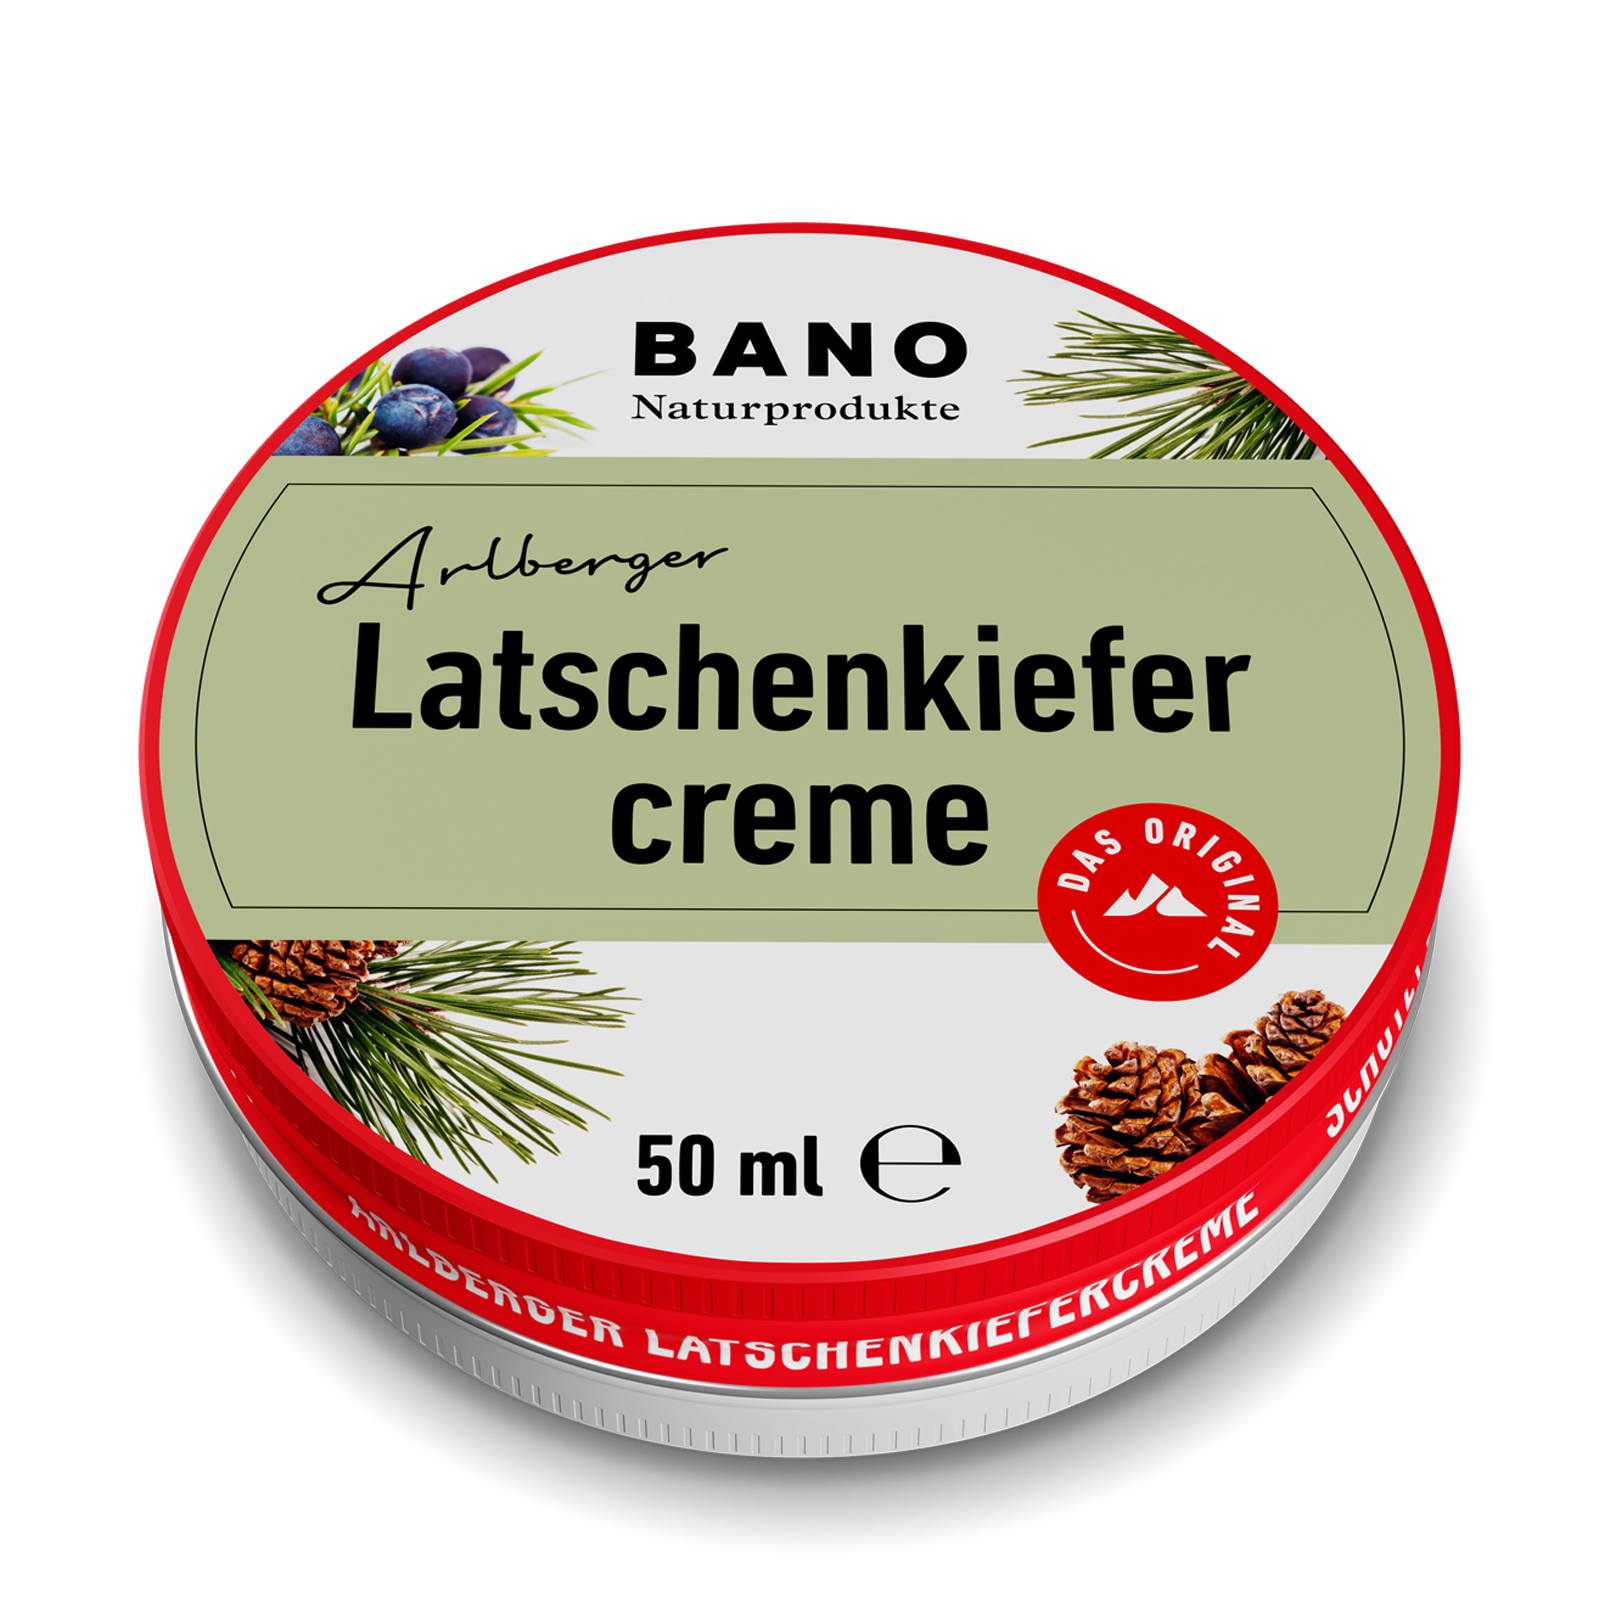 Arlberger Latschenkiefercreme